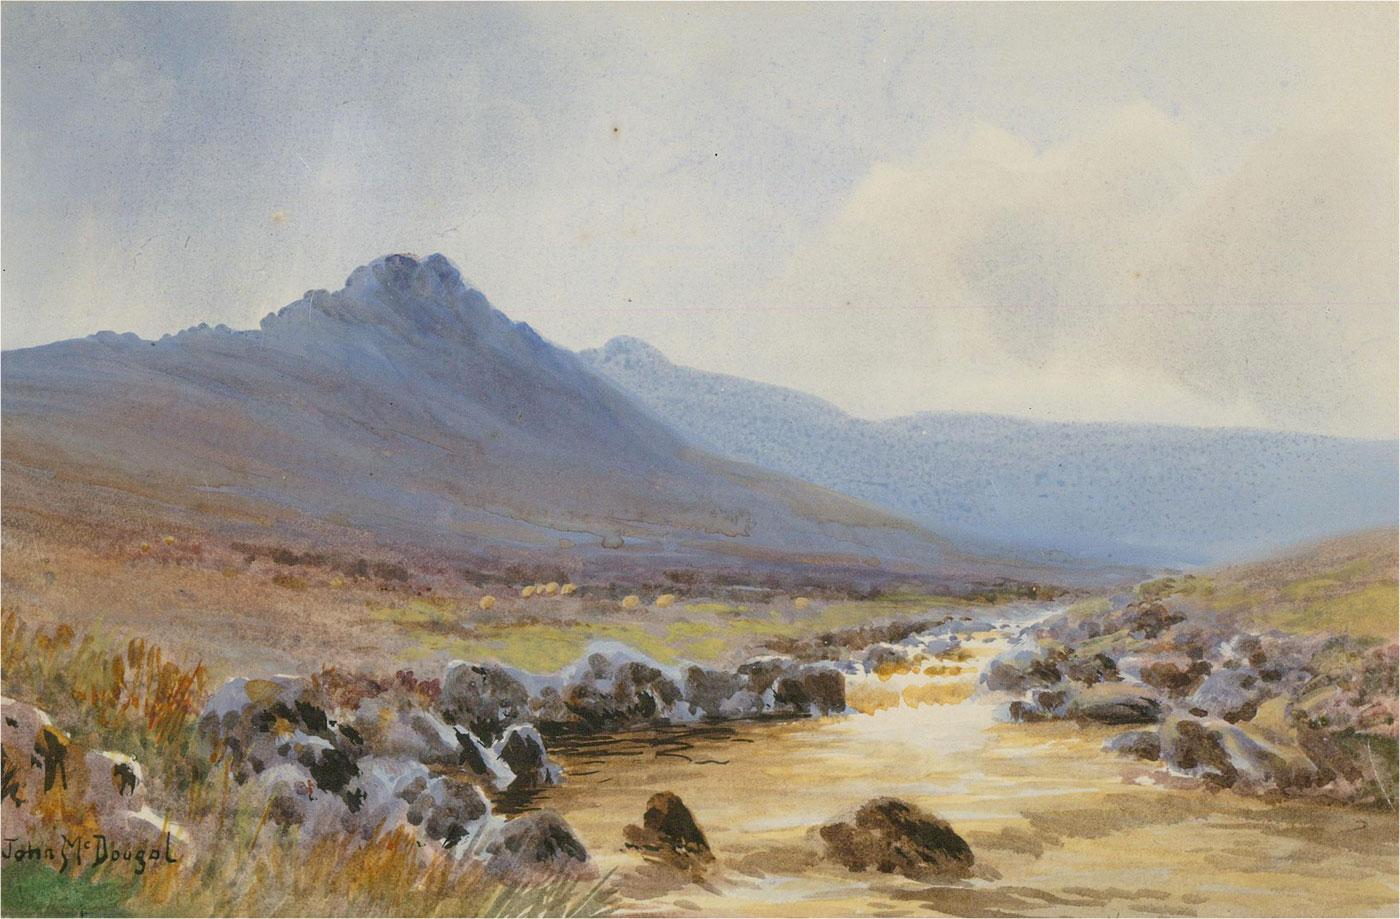 John McDougal (1851-1945) - Early 20th Century Watercolour, Mountain Landscape 2